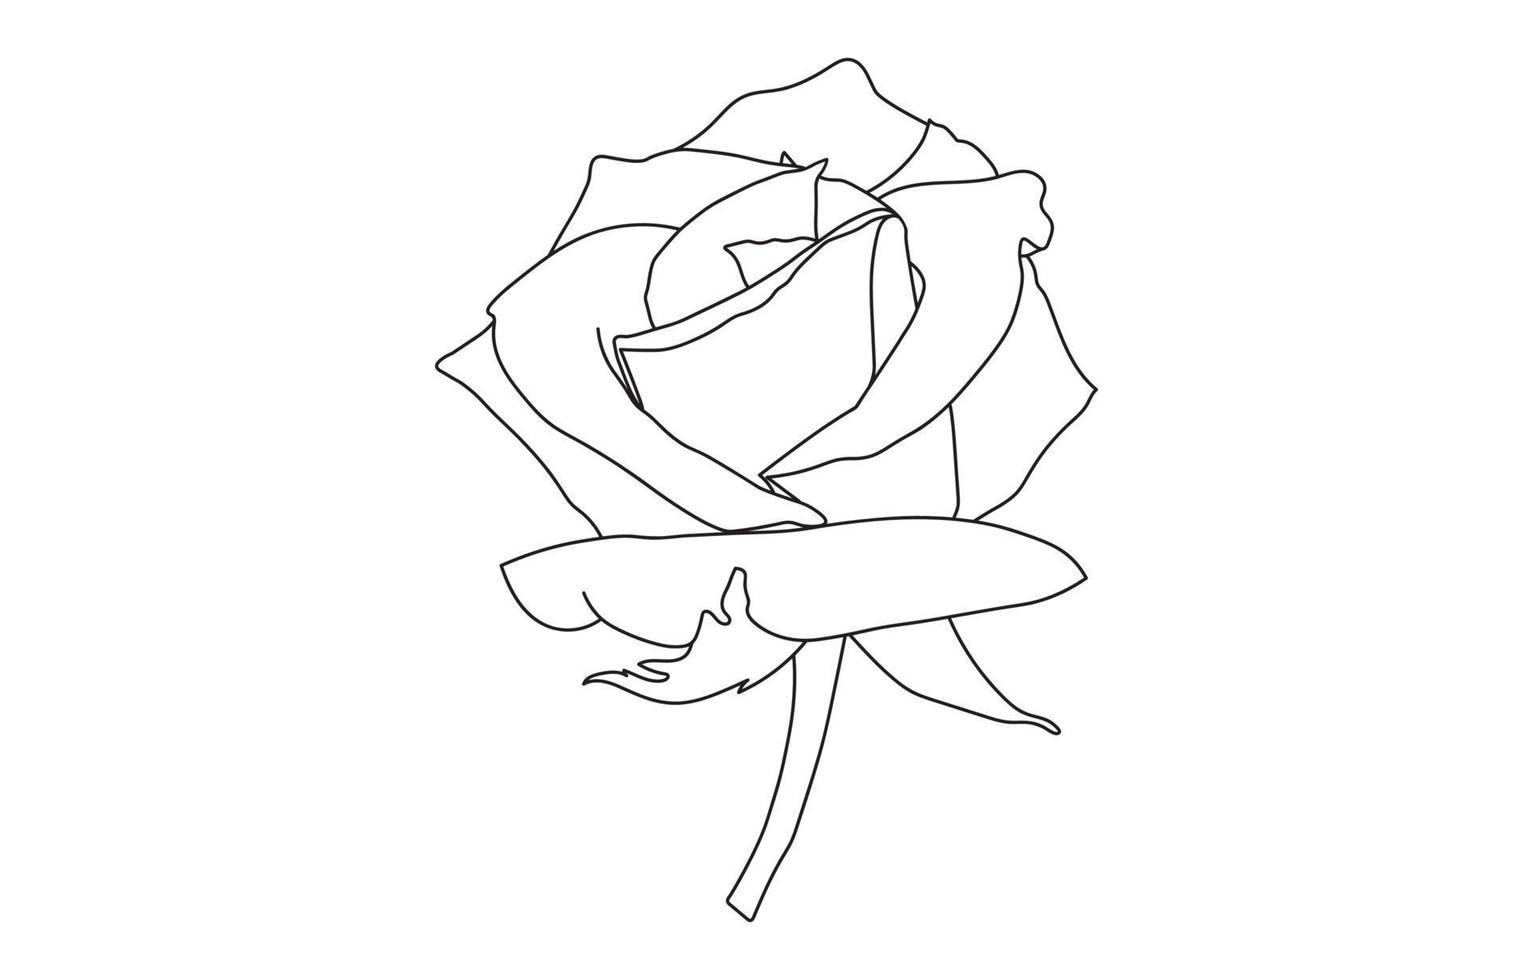 Rose vector graphic design, for prints, vector illustration